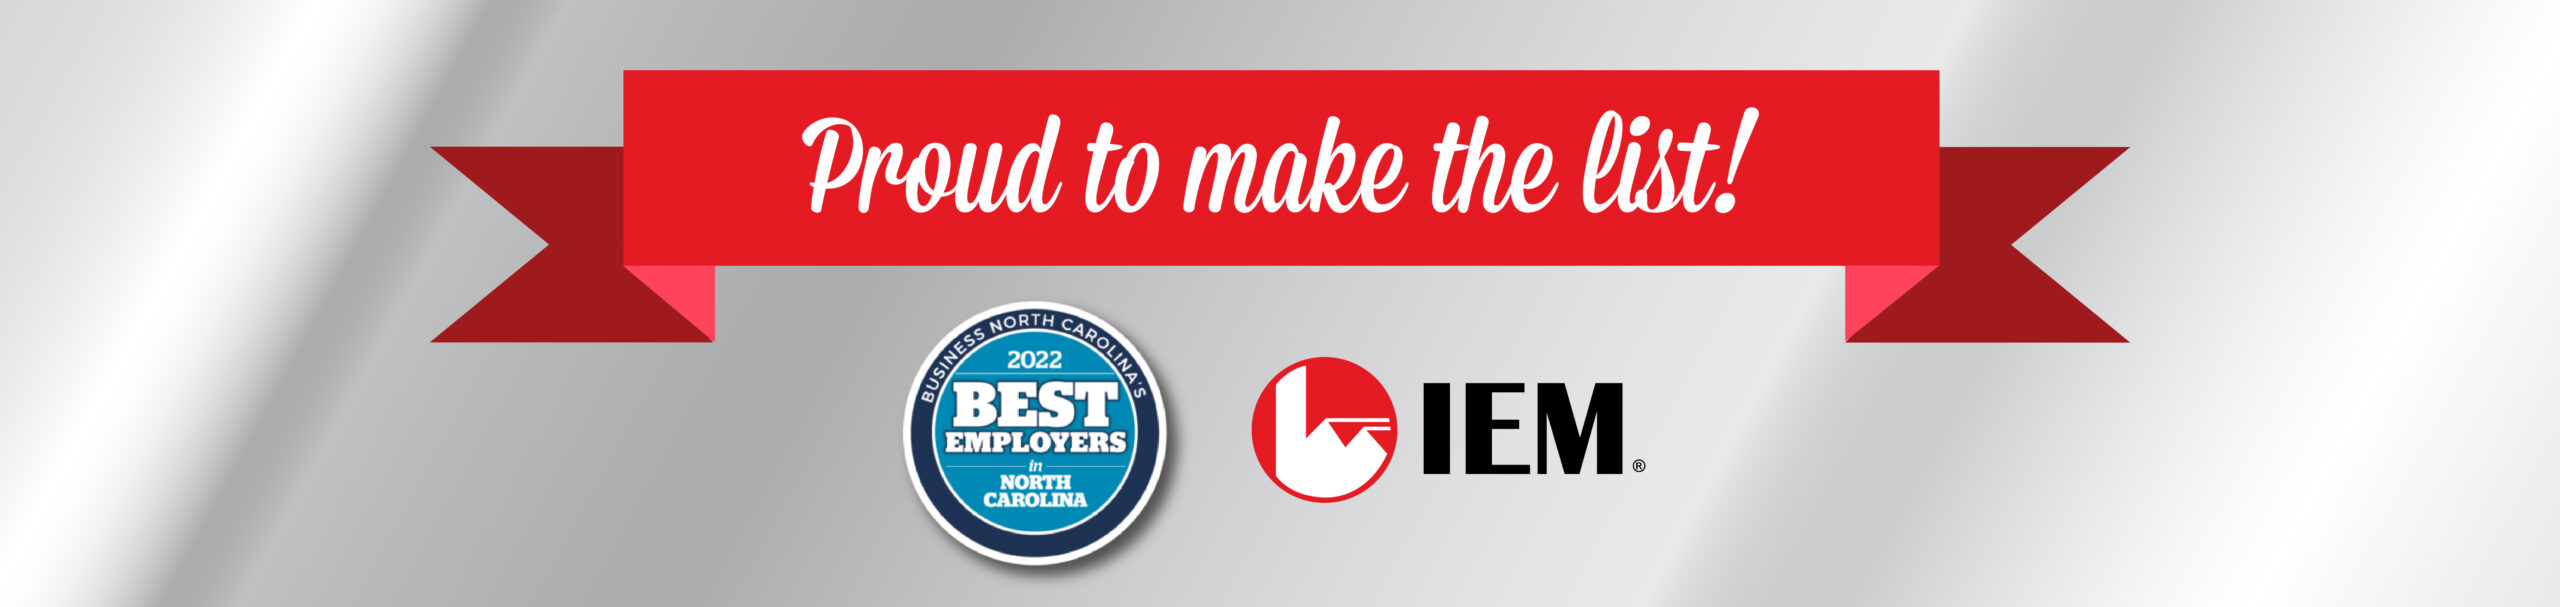 IEM-Best-Employers-List_Web-Baner